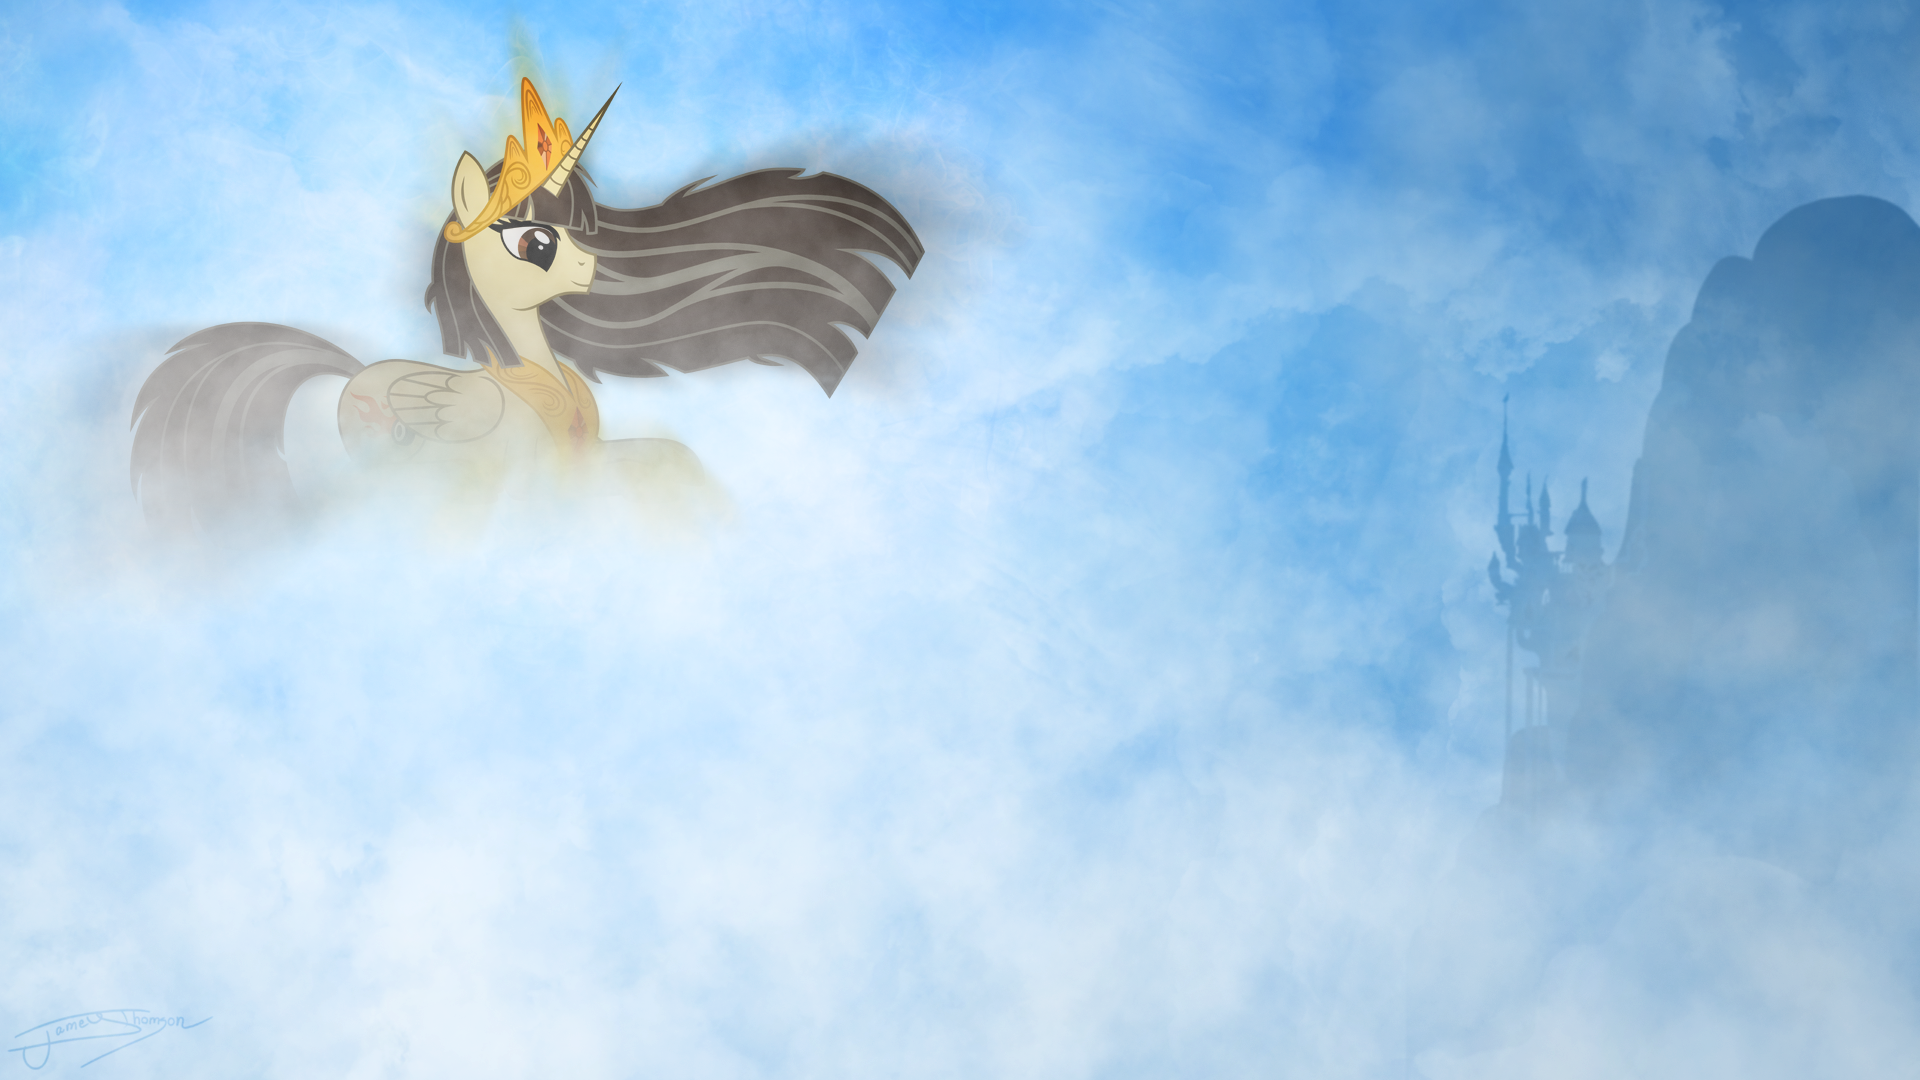 Princess Wildfire - Goddess of Equestria by Ambassad0r, Jamey4 and Qsteel